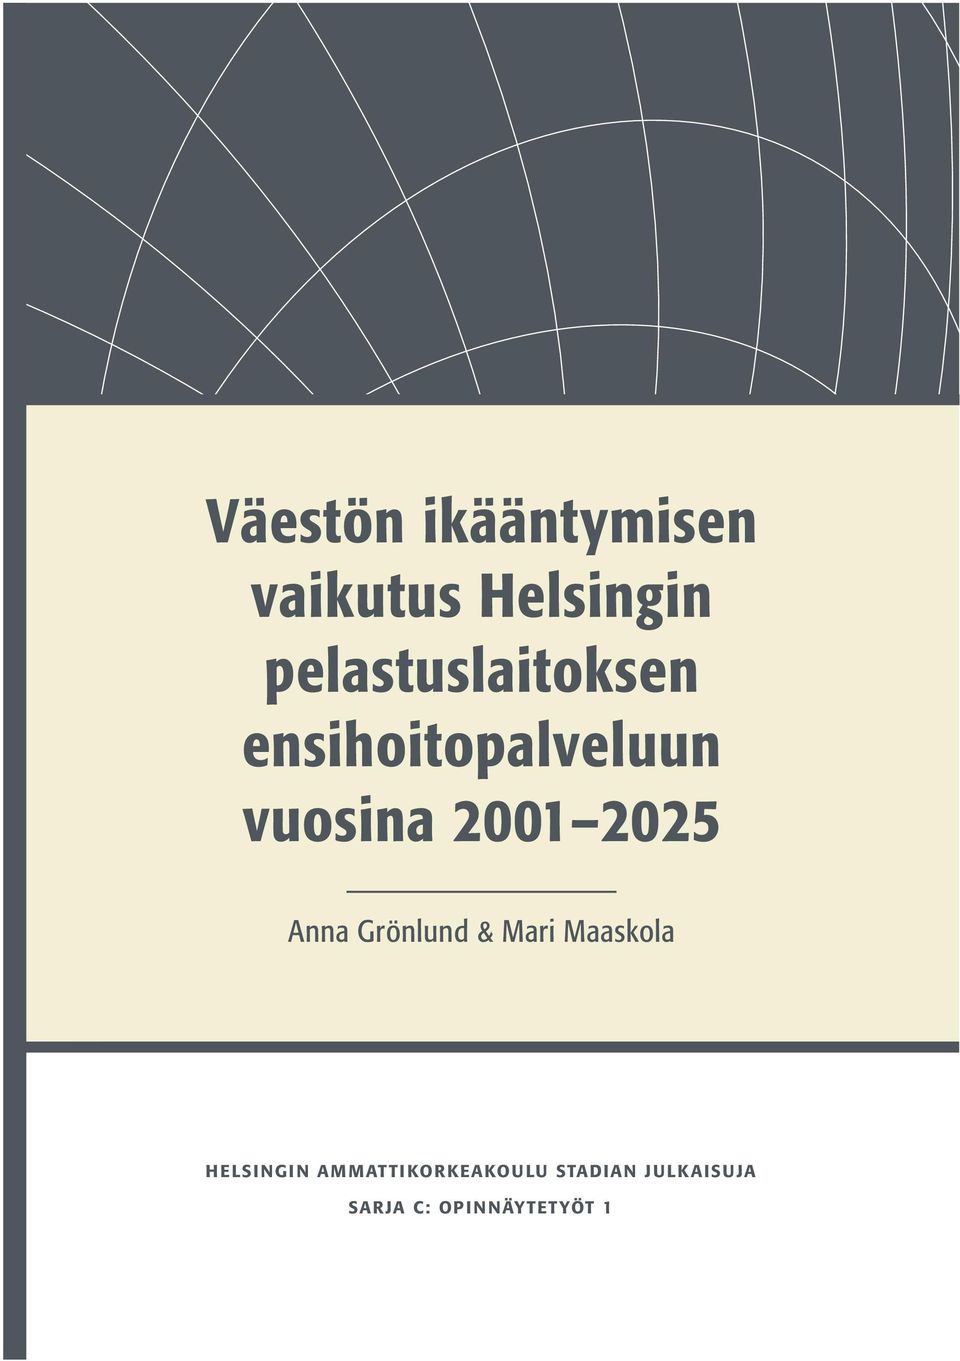 2025 Anna Grönlund & Mari Maaskola HELSINGIN